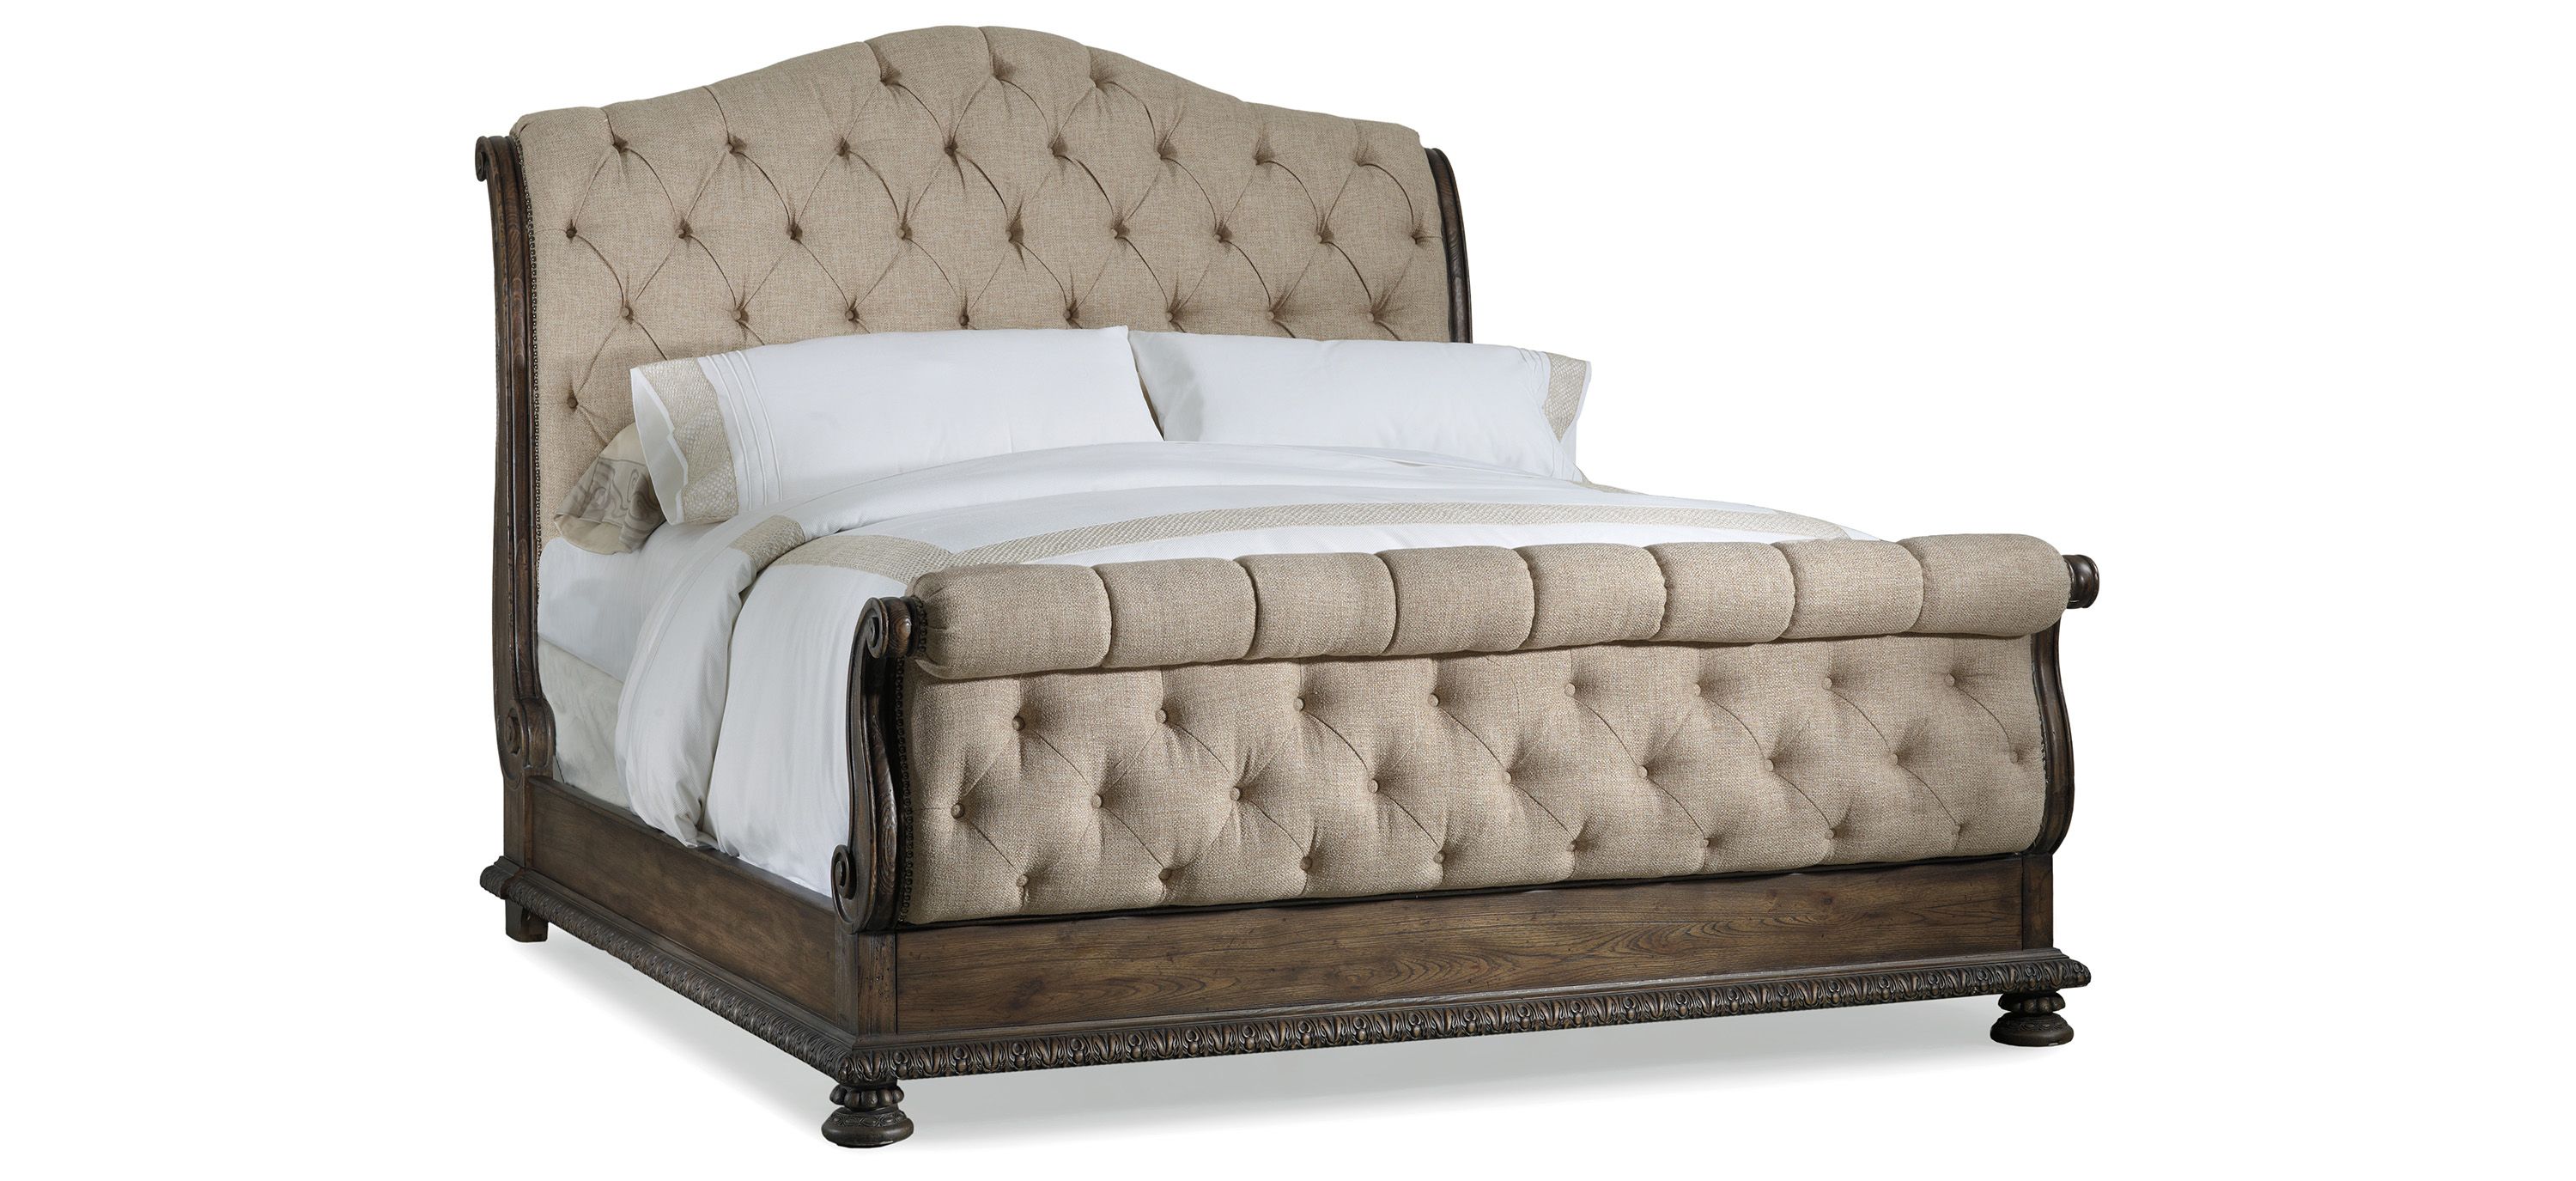 Rhapsody Tufted Bed